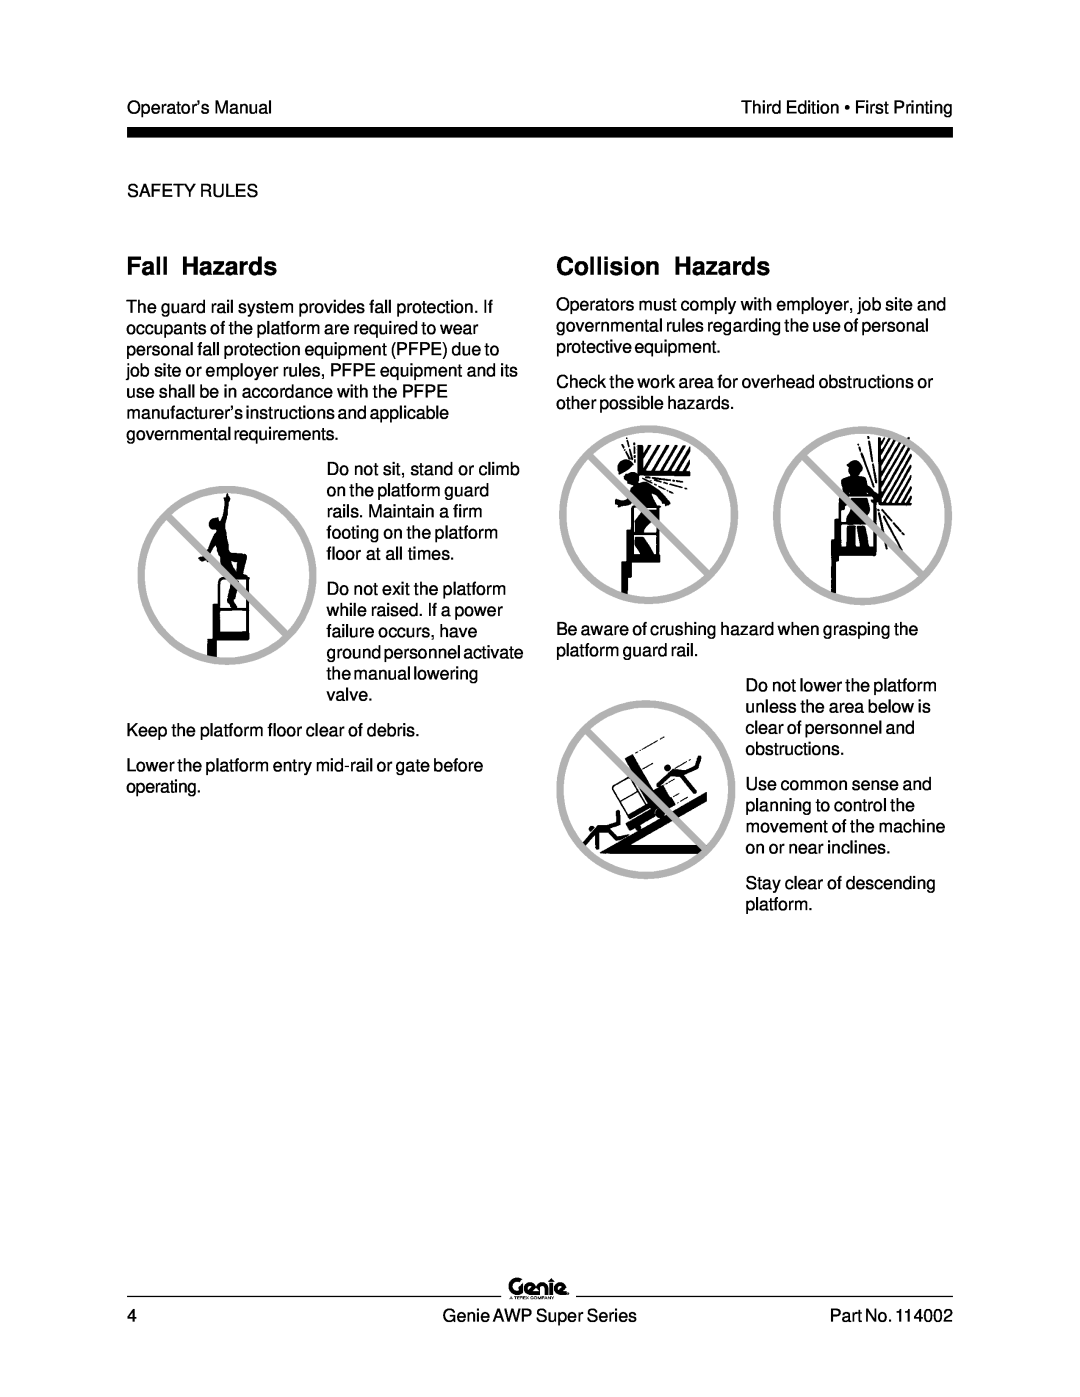 Genie 114002 manual Fall Hazards, Collision Hazards 